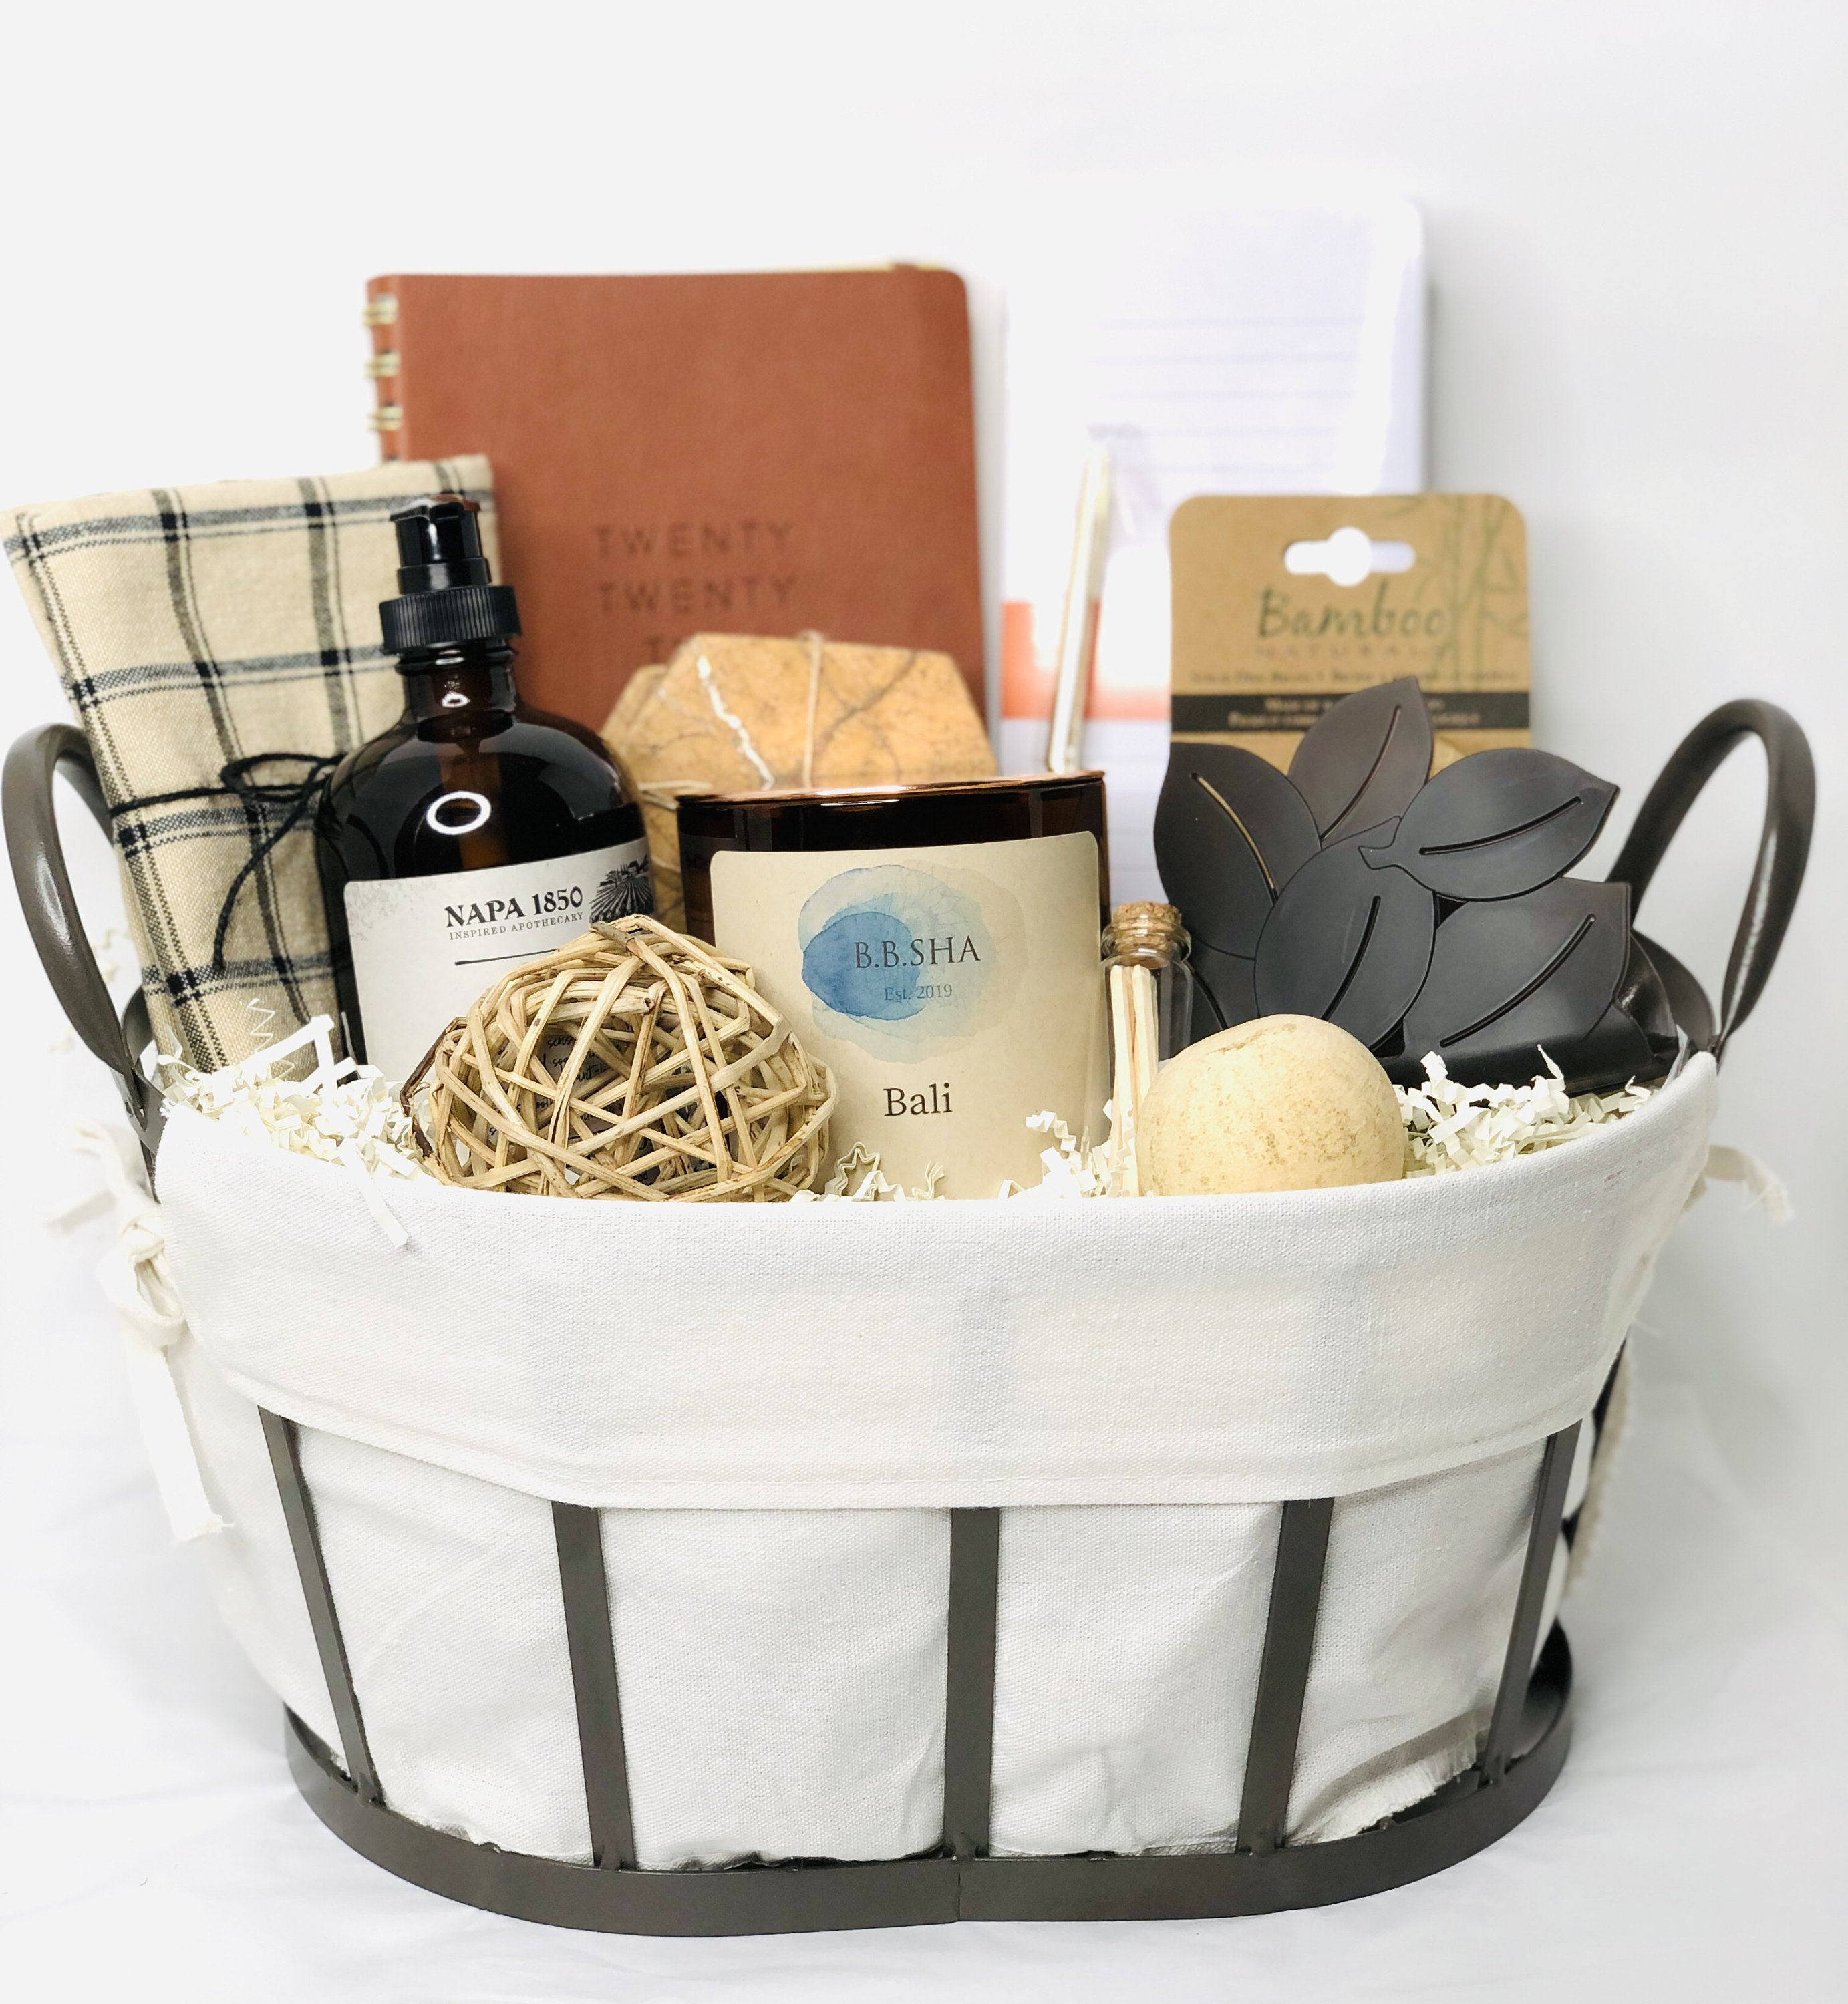 Housewarming gift basket stuff with kitchenware